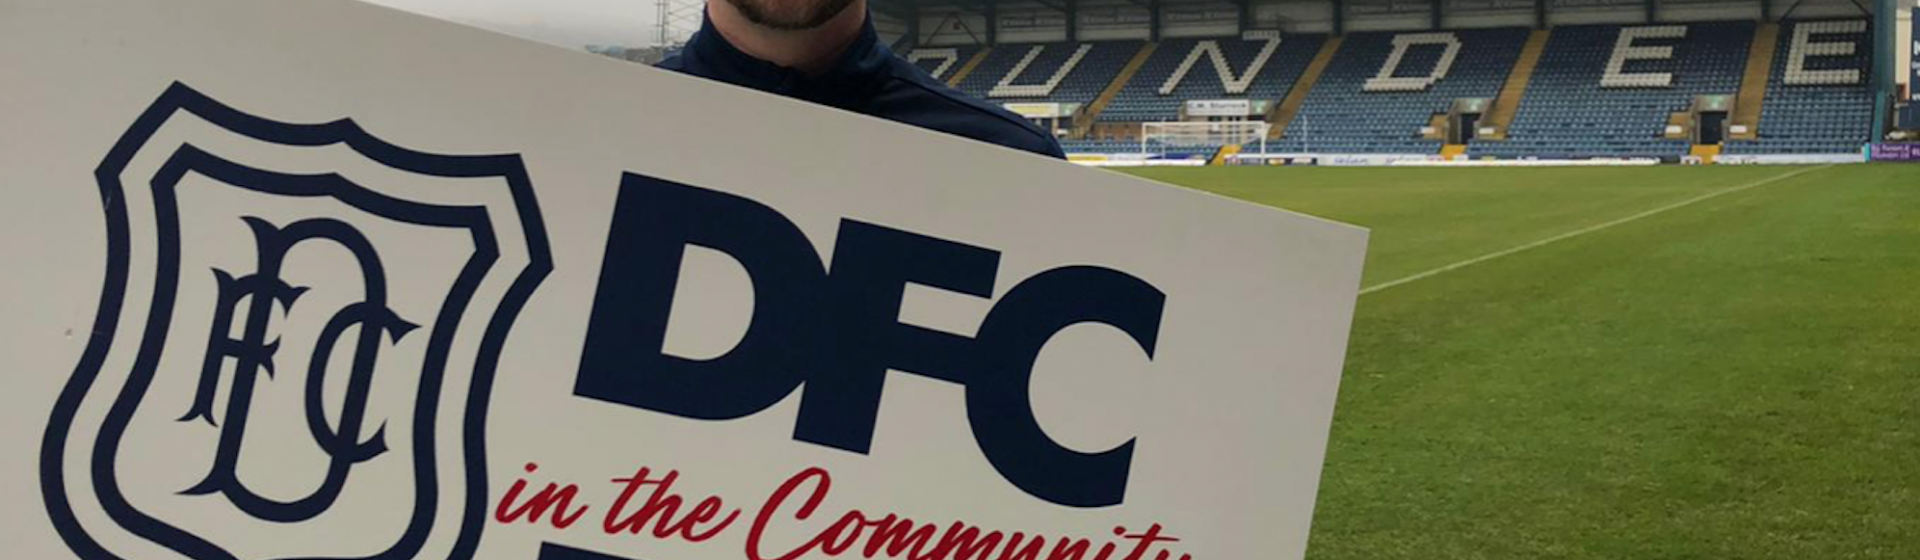 Dundee FC Community Trust header